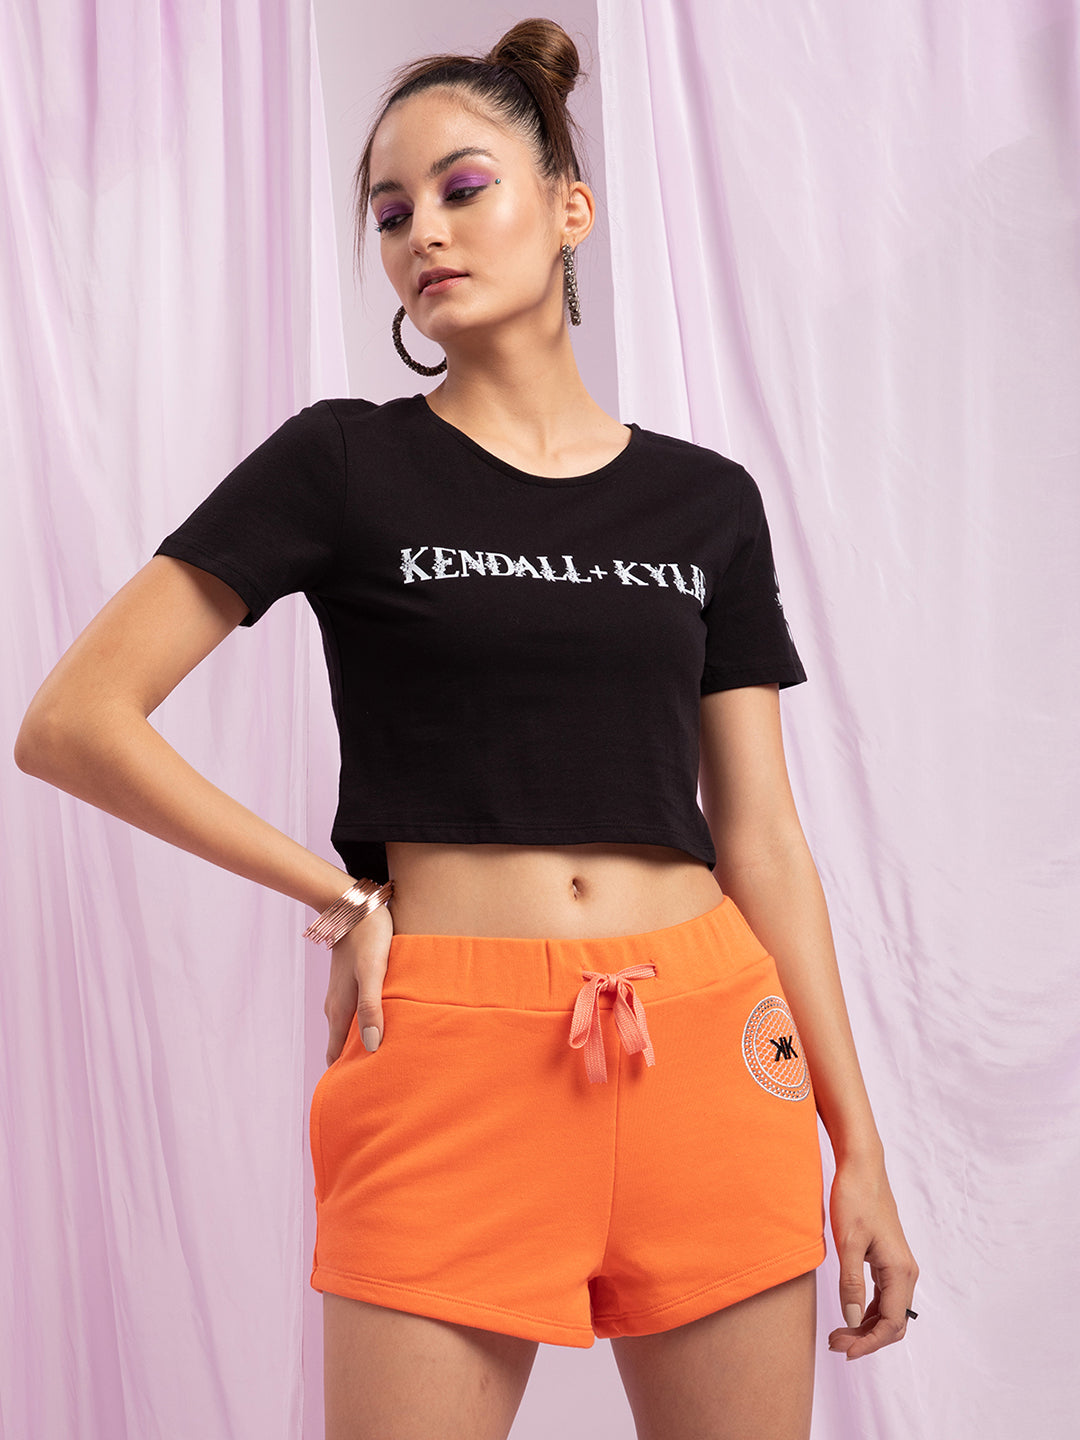 Kendall + Kylie Women Black Printed Round Neck TShirt